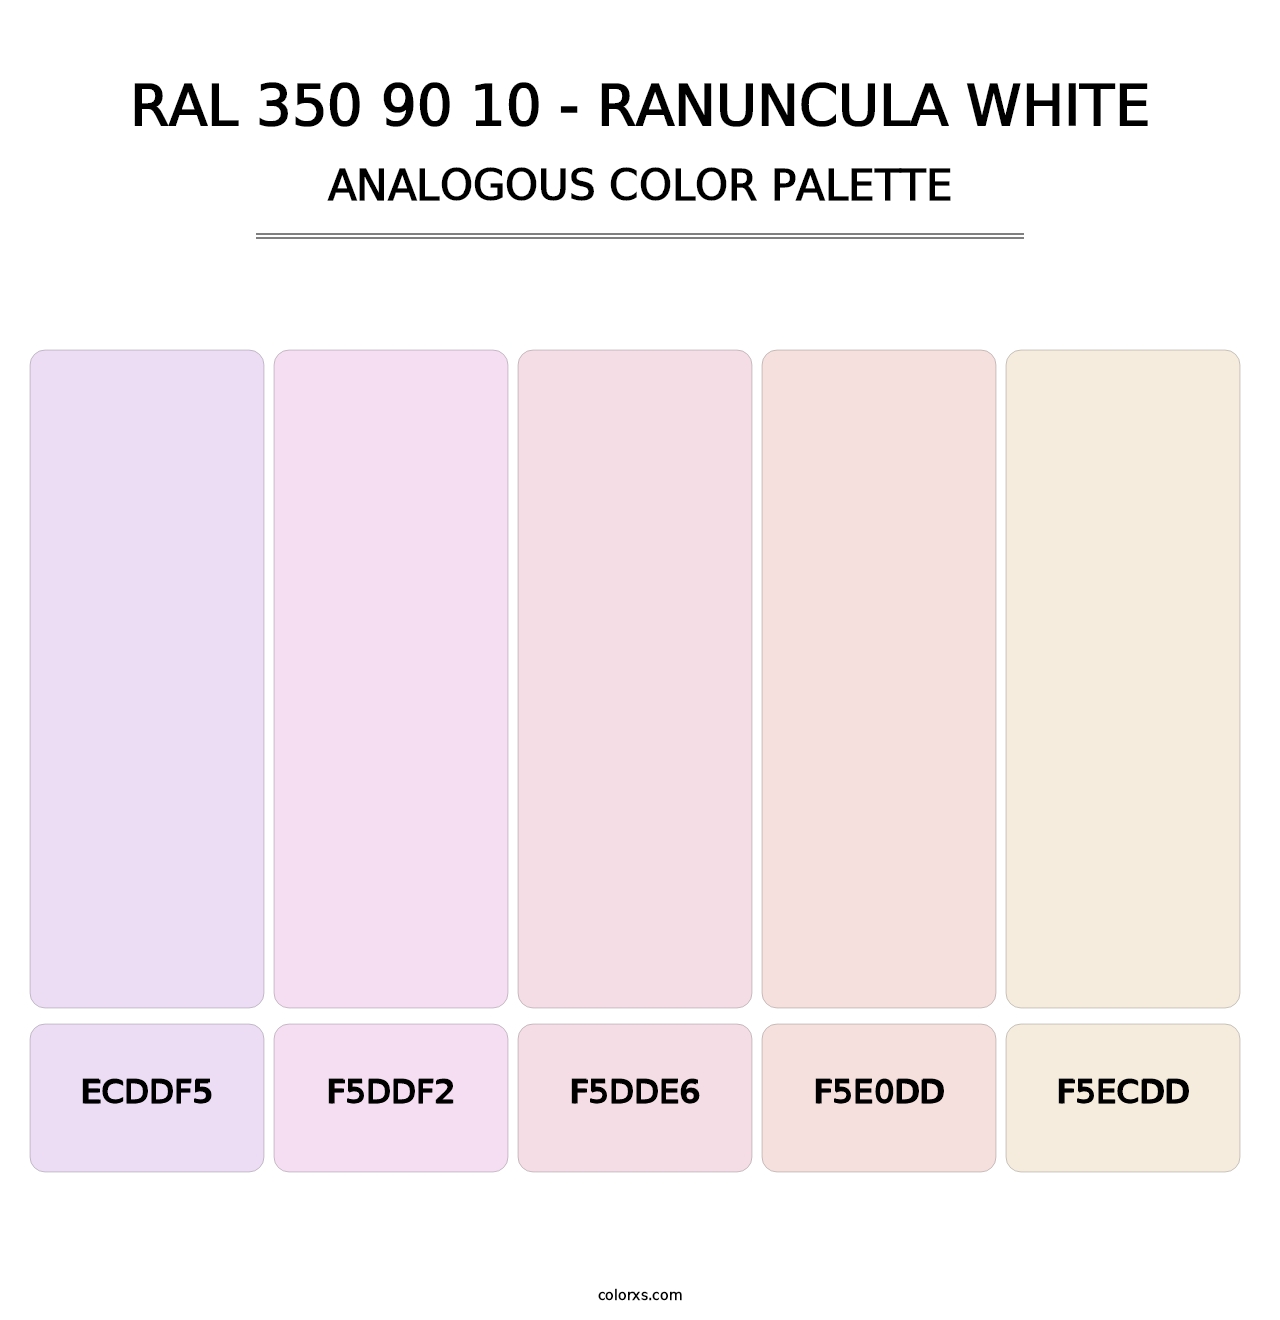 RAL 350 90 10 - Ranuncula White - Analogous Color Palette